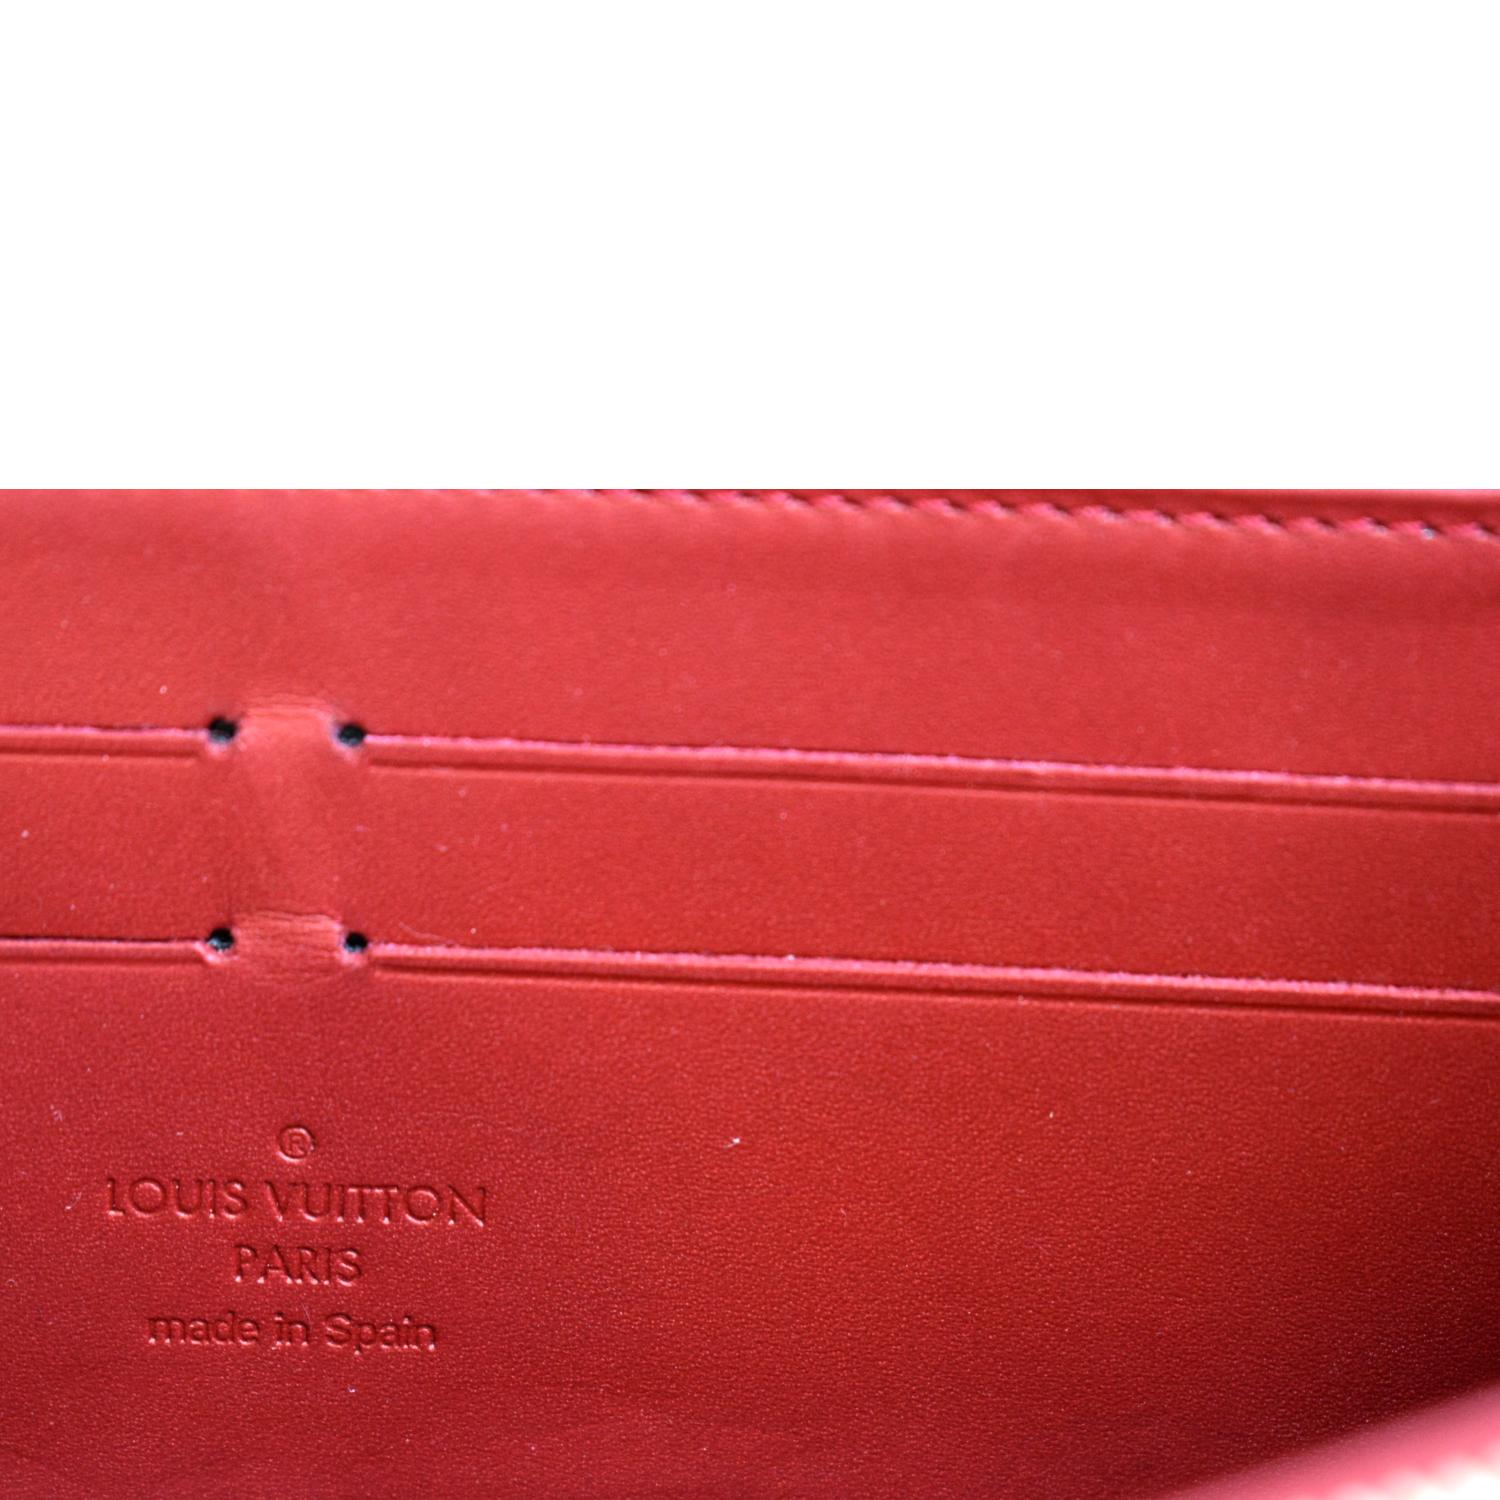 Louis Vuitton Zippy Wallet Limited Edition Valentine Floral Monogram Vernis  Pink